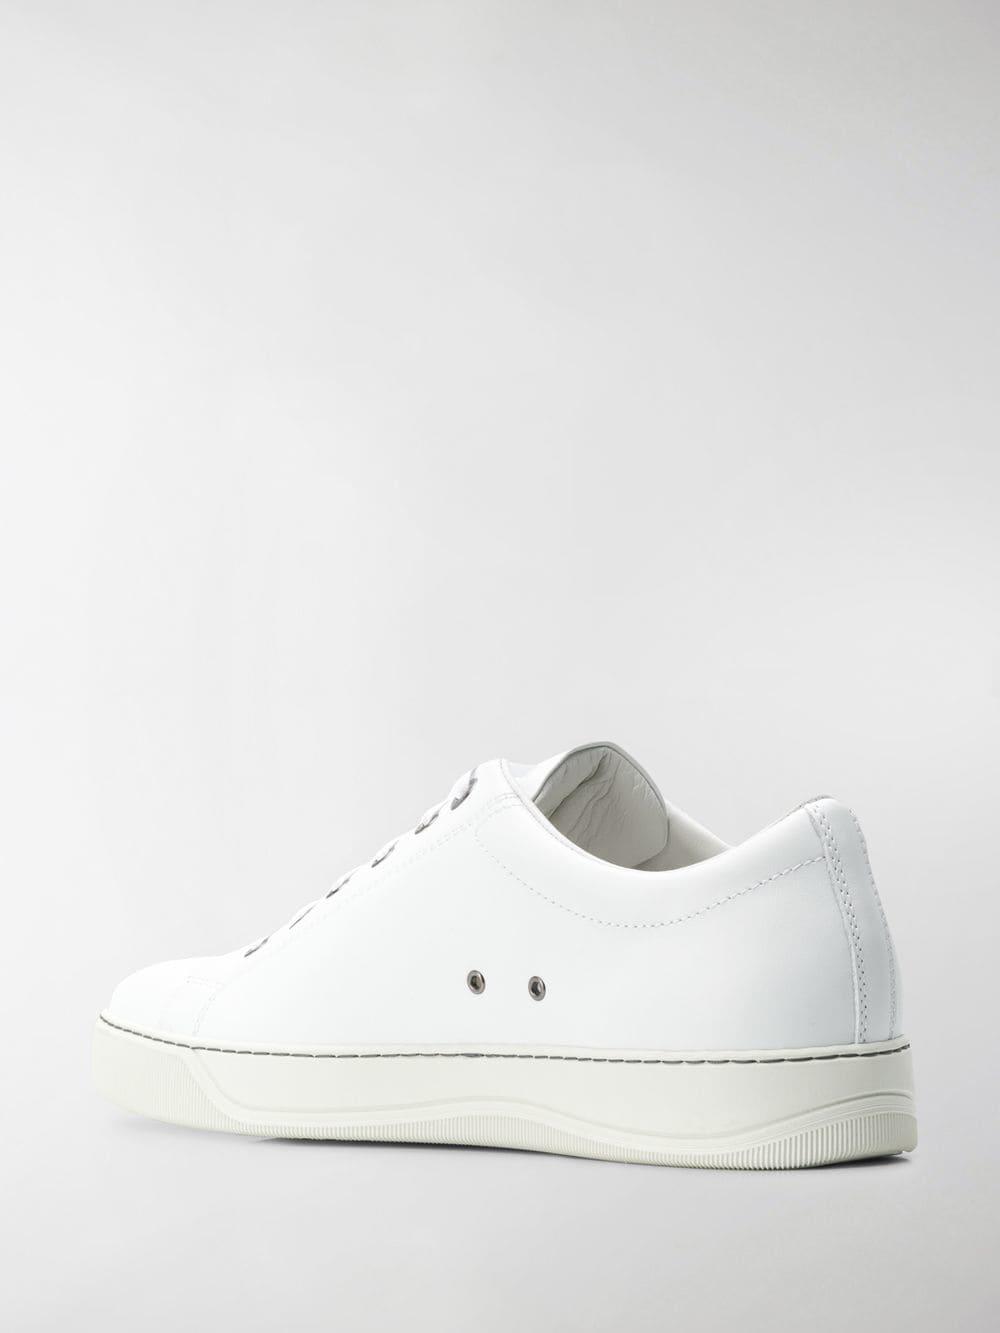 Rafflesia Arnoldi Beundringsværdig domæne Lanvin Leather 3d Print Sneakers in White for Men - Lyst